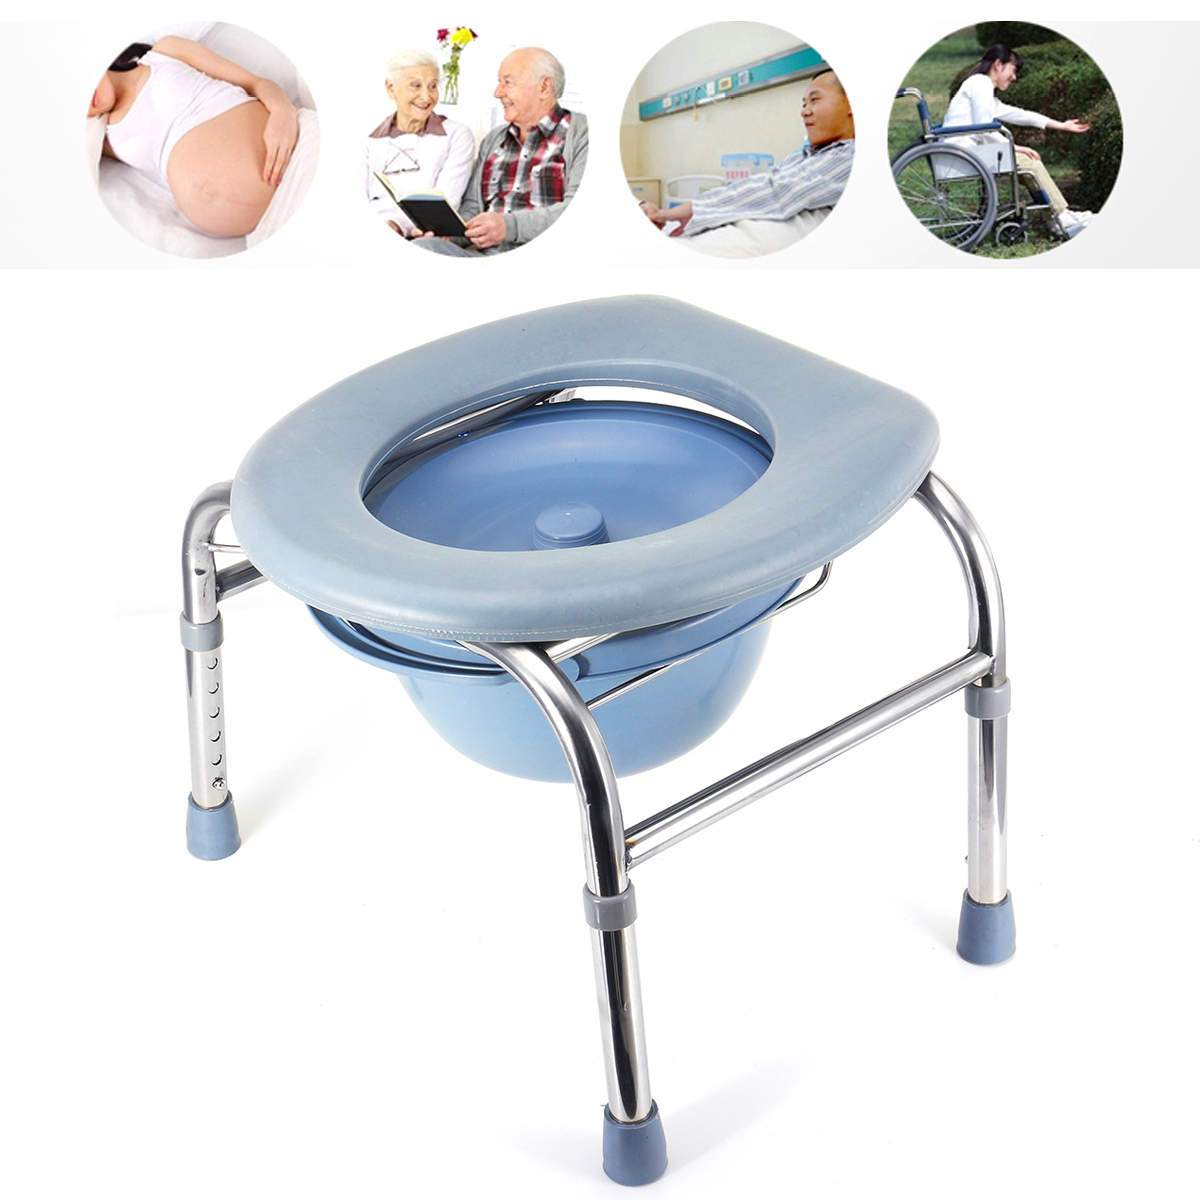 Foldable-Adjustable-Beside-Commode-Chair-Toilet-Bathroom-Shower-Seat-For-Elderly-1571563